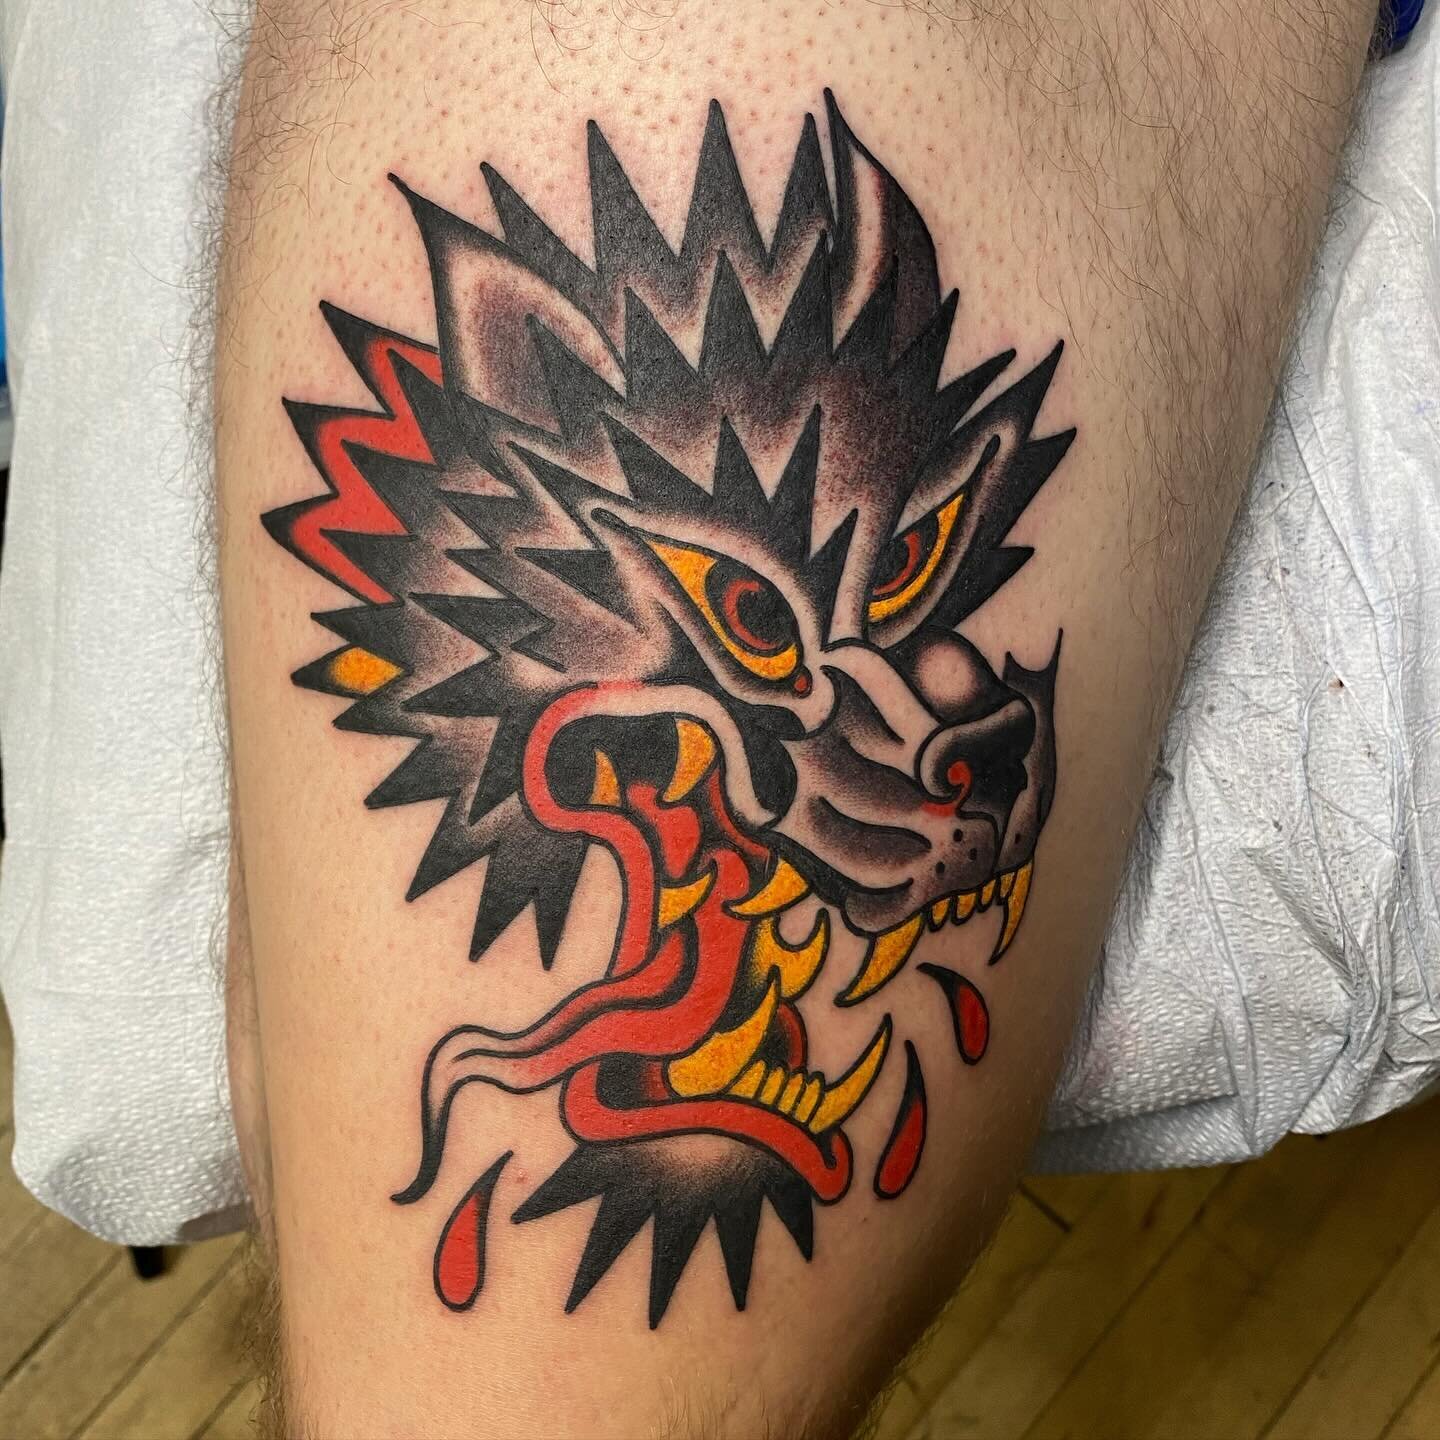 Thanks Jon! Always always always down to tattoo a wolf head.